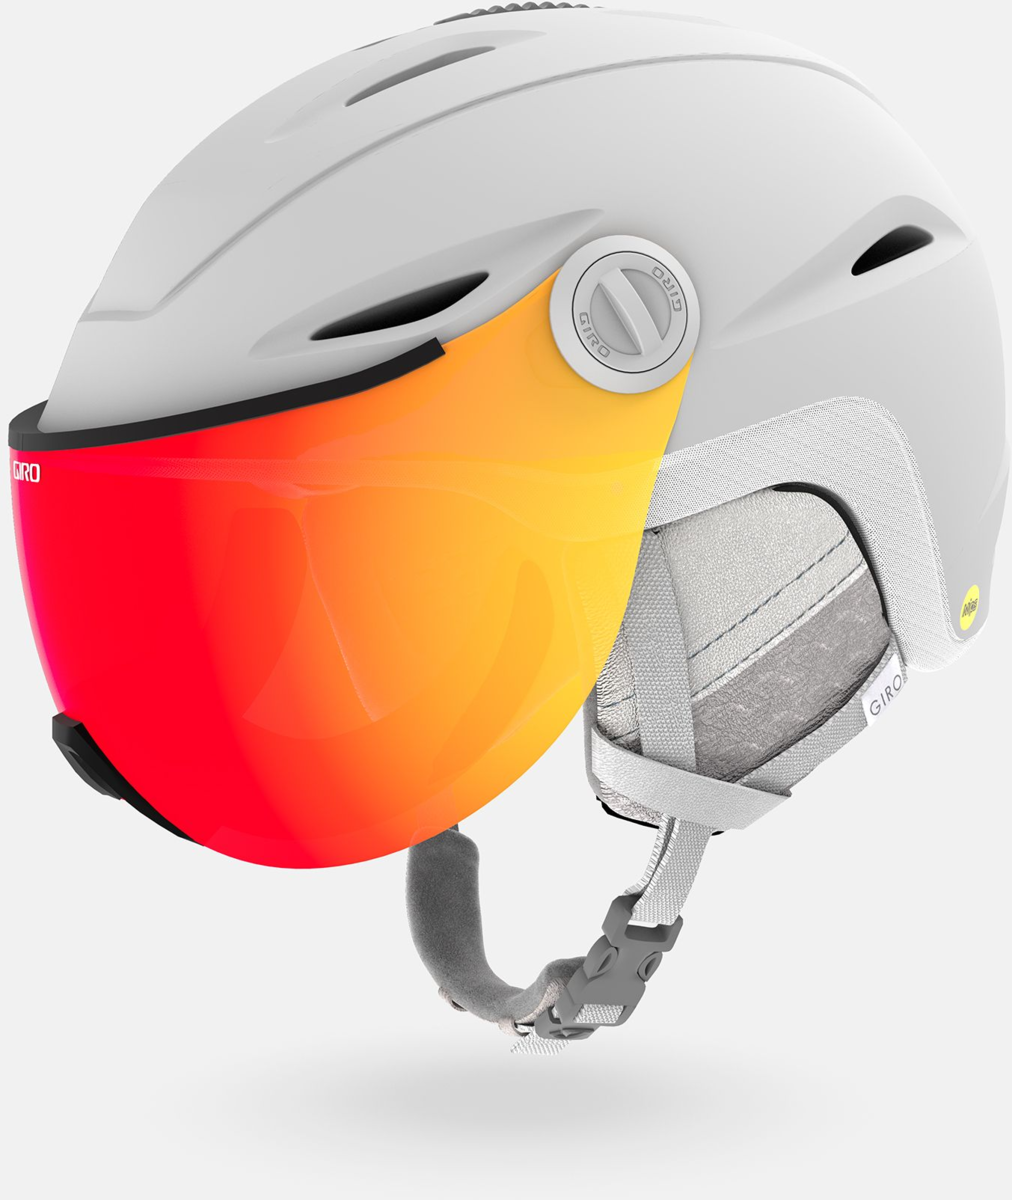 The Giro Essence MIPS Snow helmet